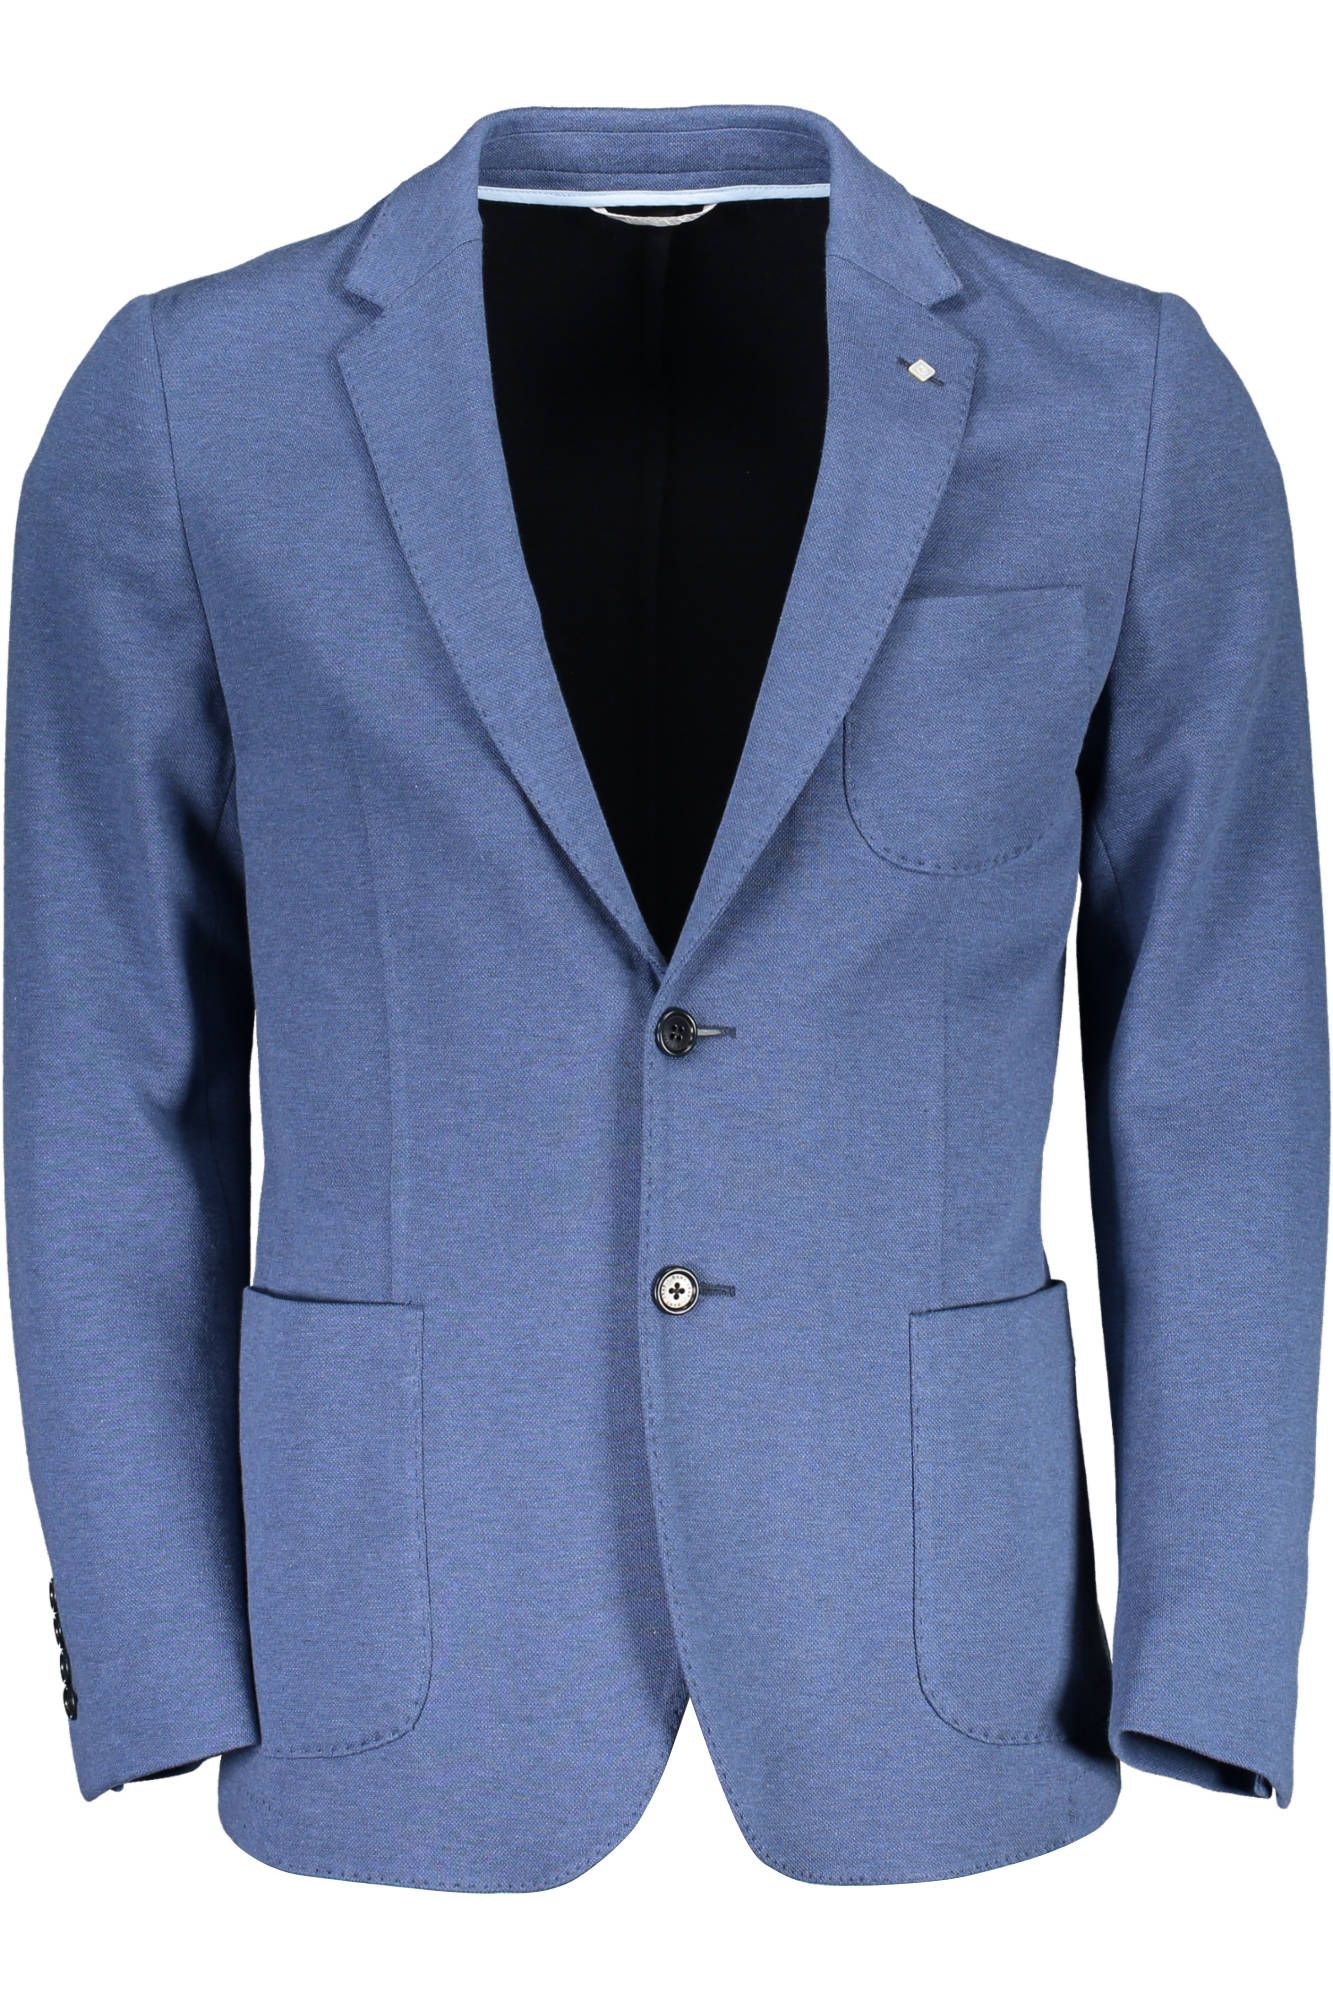 Elegant Cotton Blend Blue Jacket - Divitiae Glamour